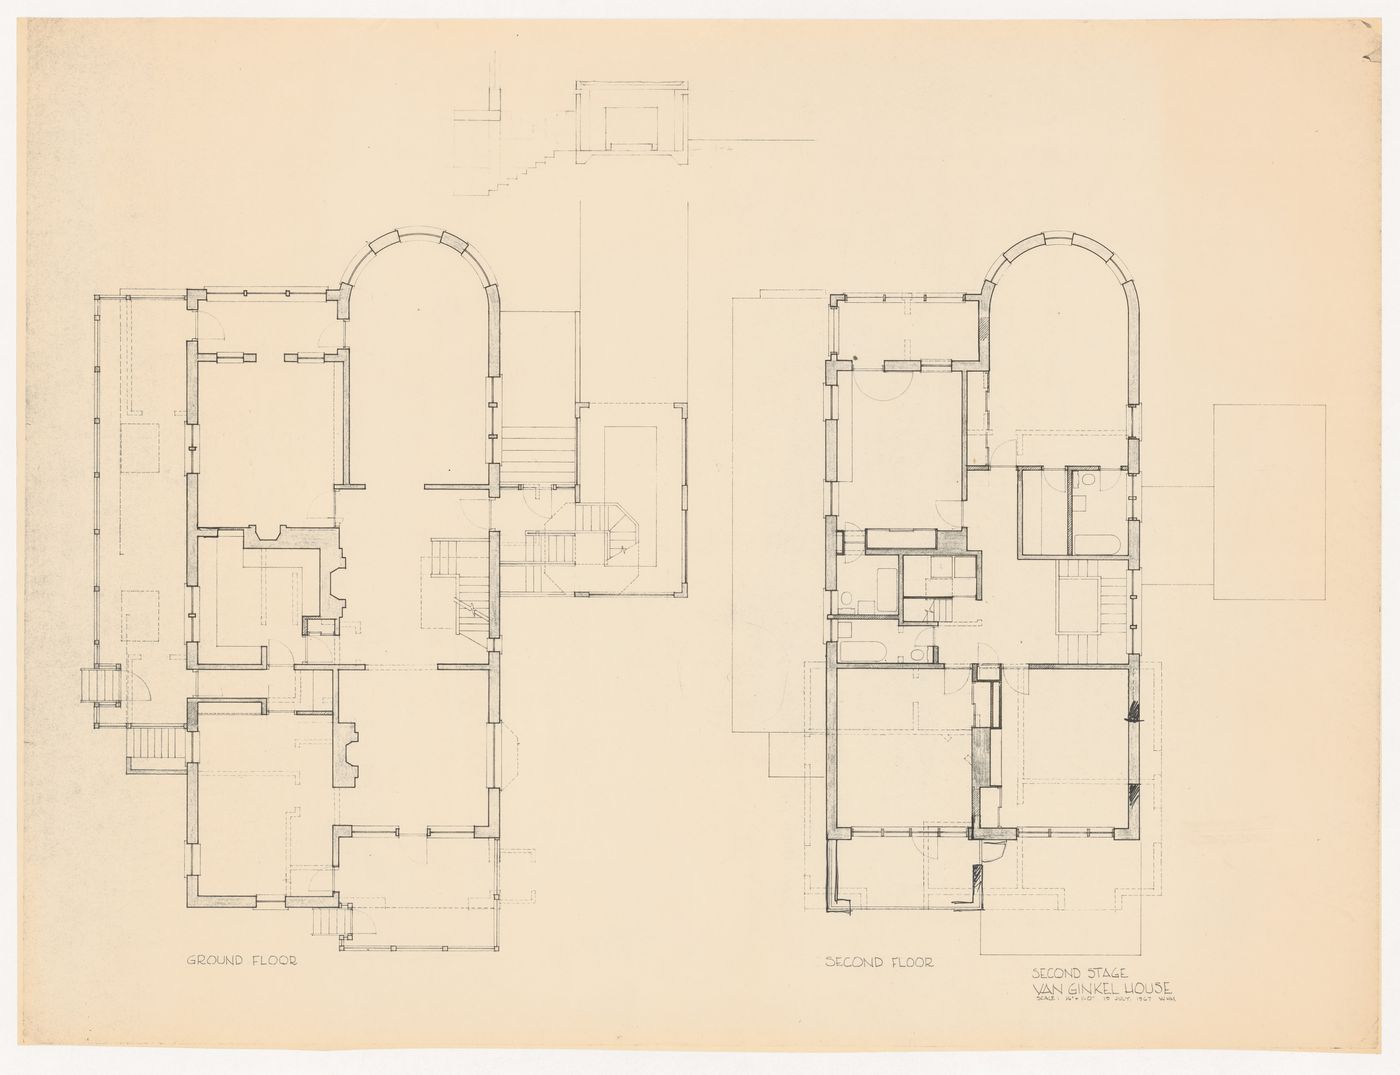 Ground floor and second floor plans for Van Ginkel House, Winnipeg, Manitoba